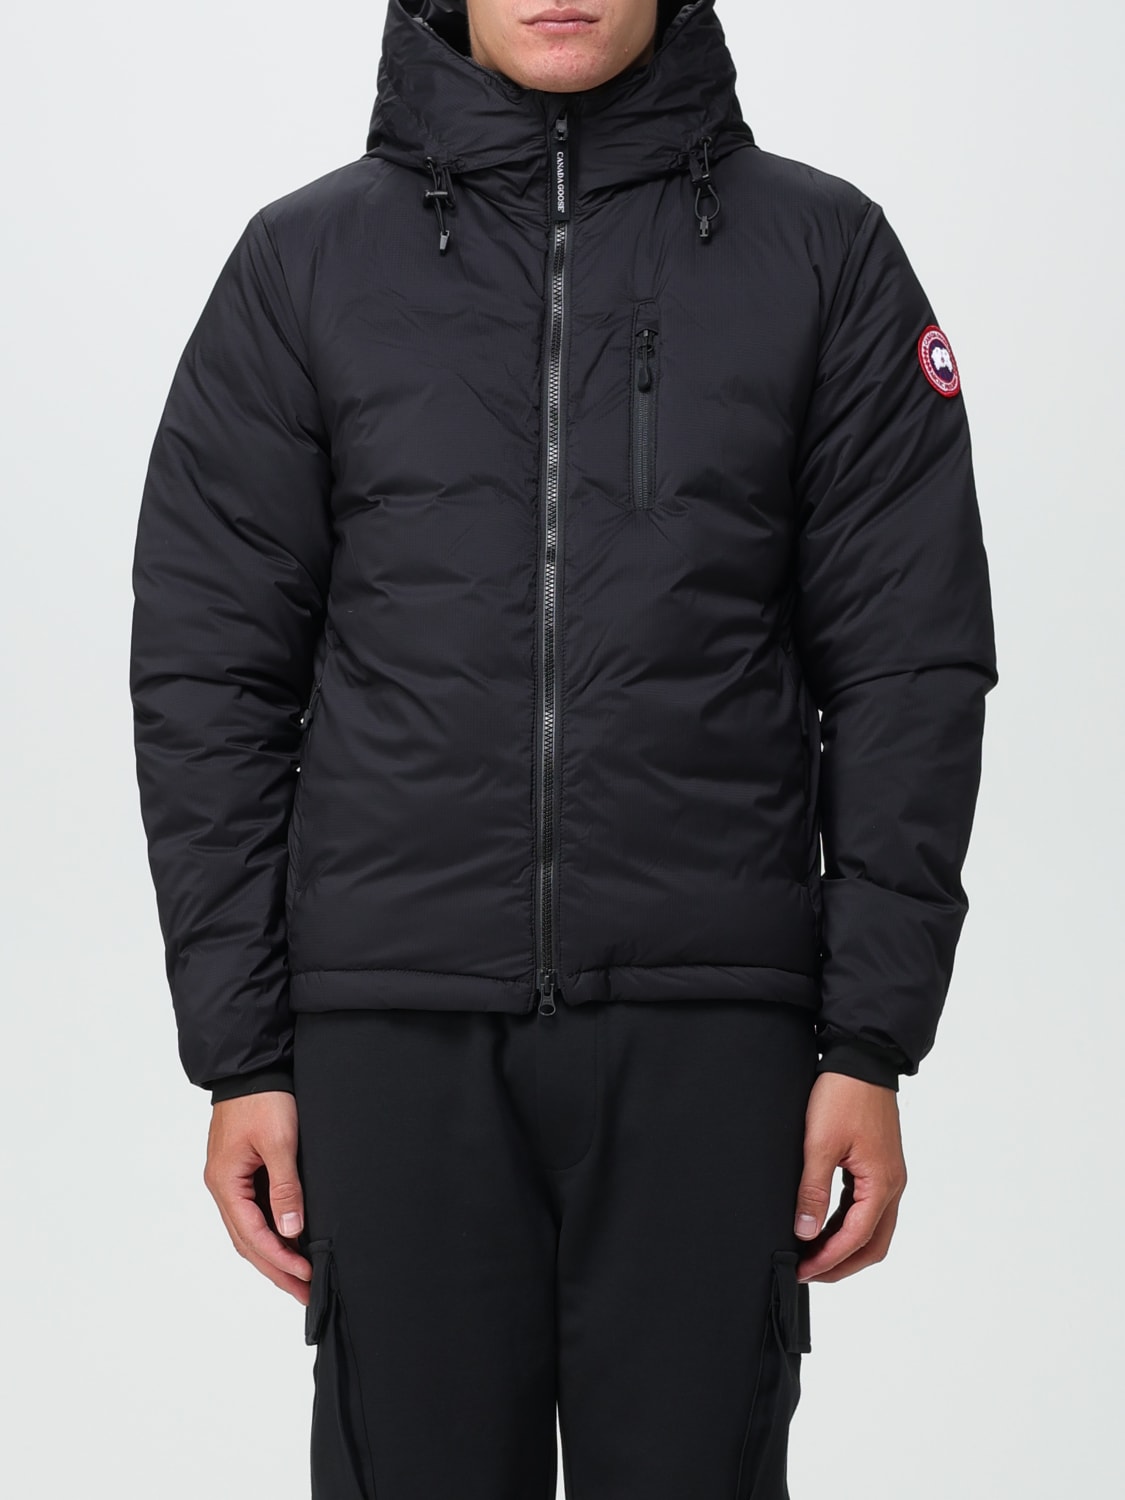 CANADA GOOSE: jacket for man - Black | Canada Goose jacket 5078M online ...